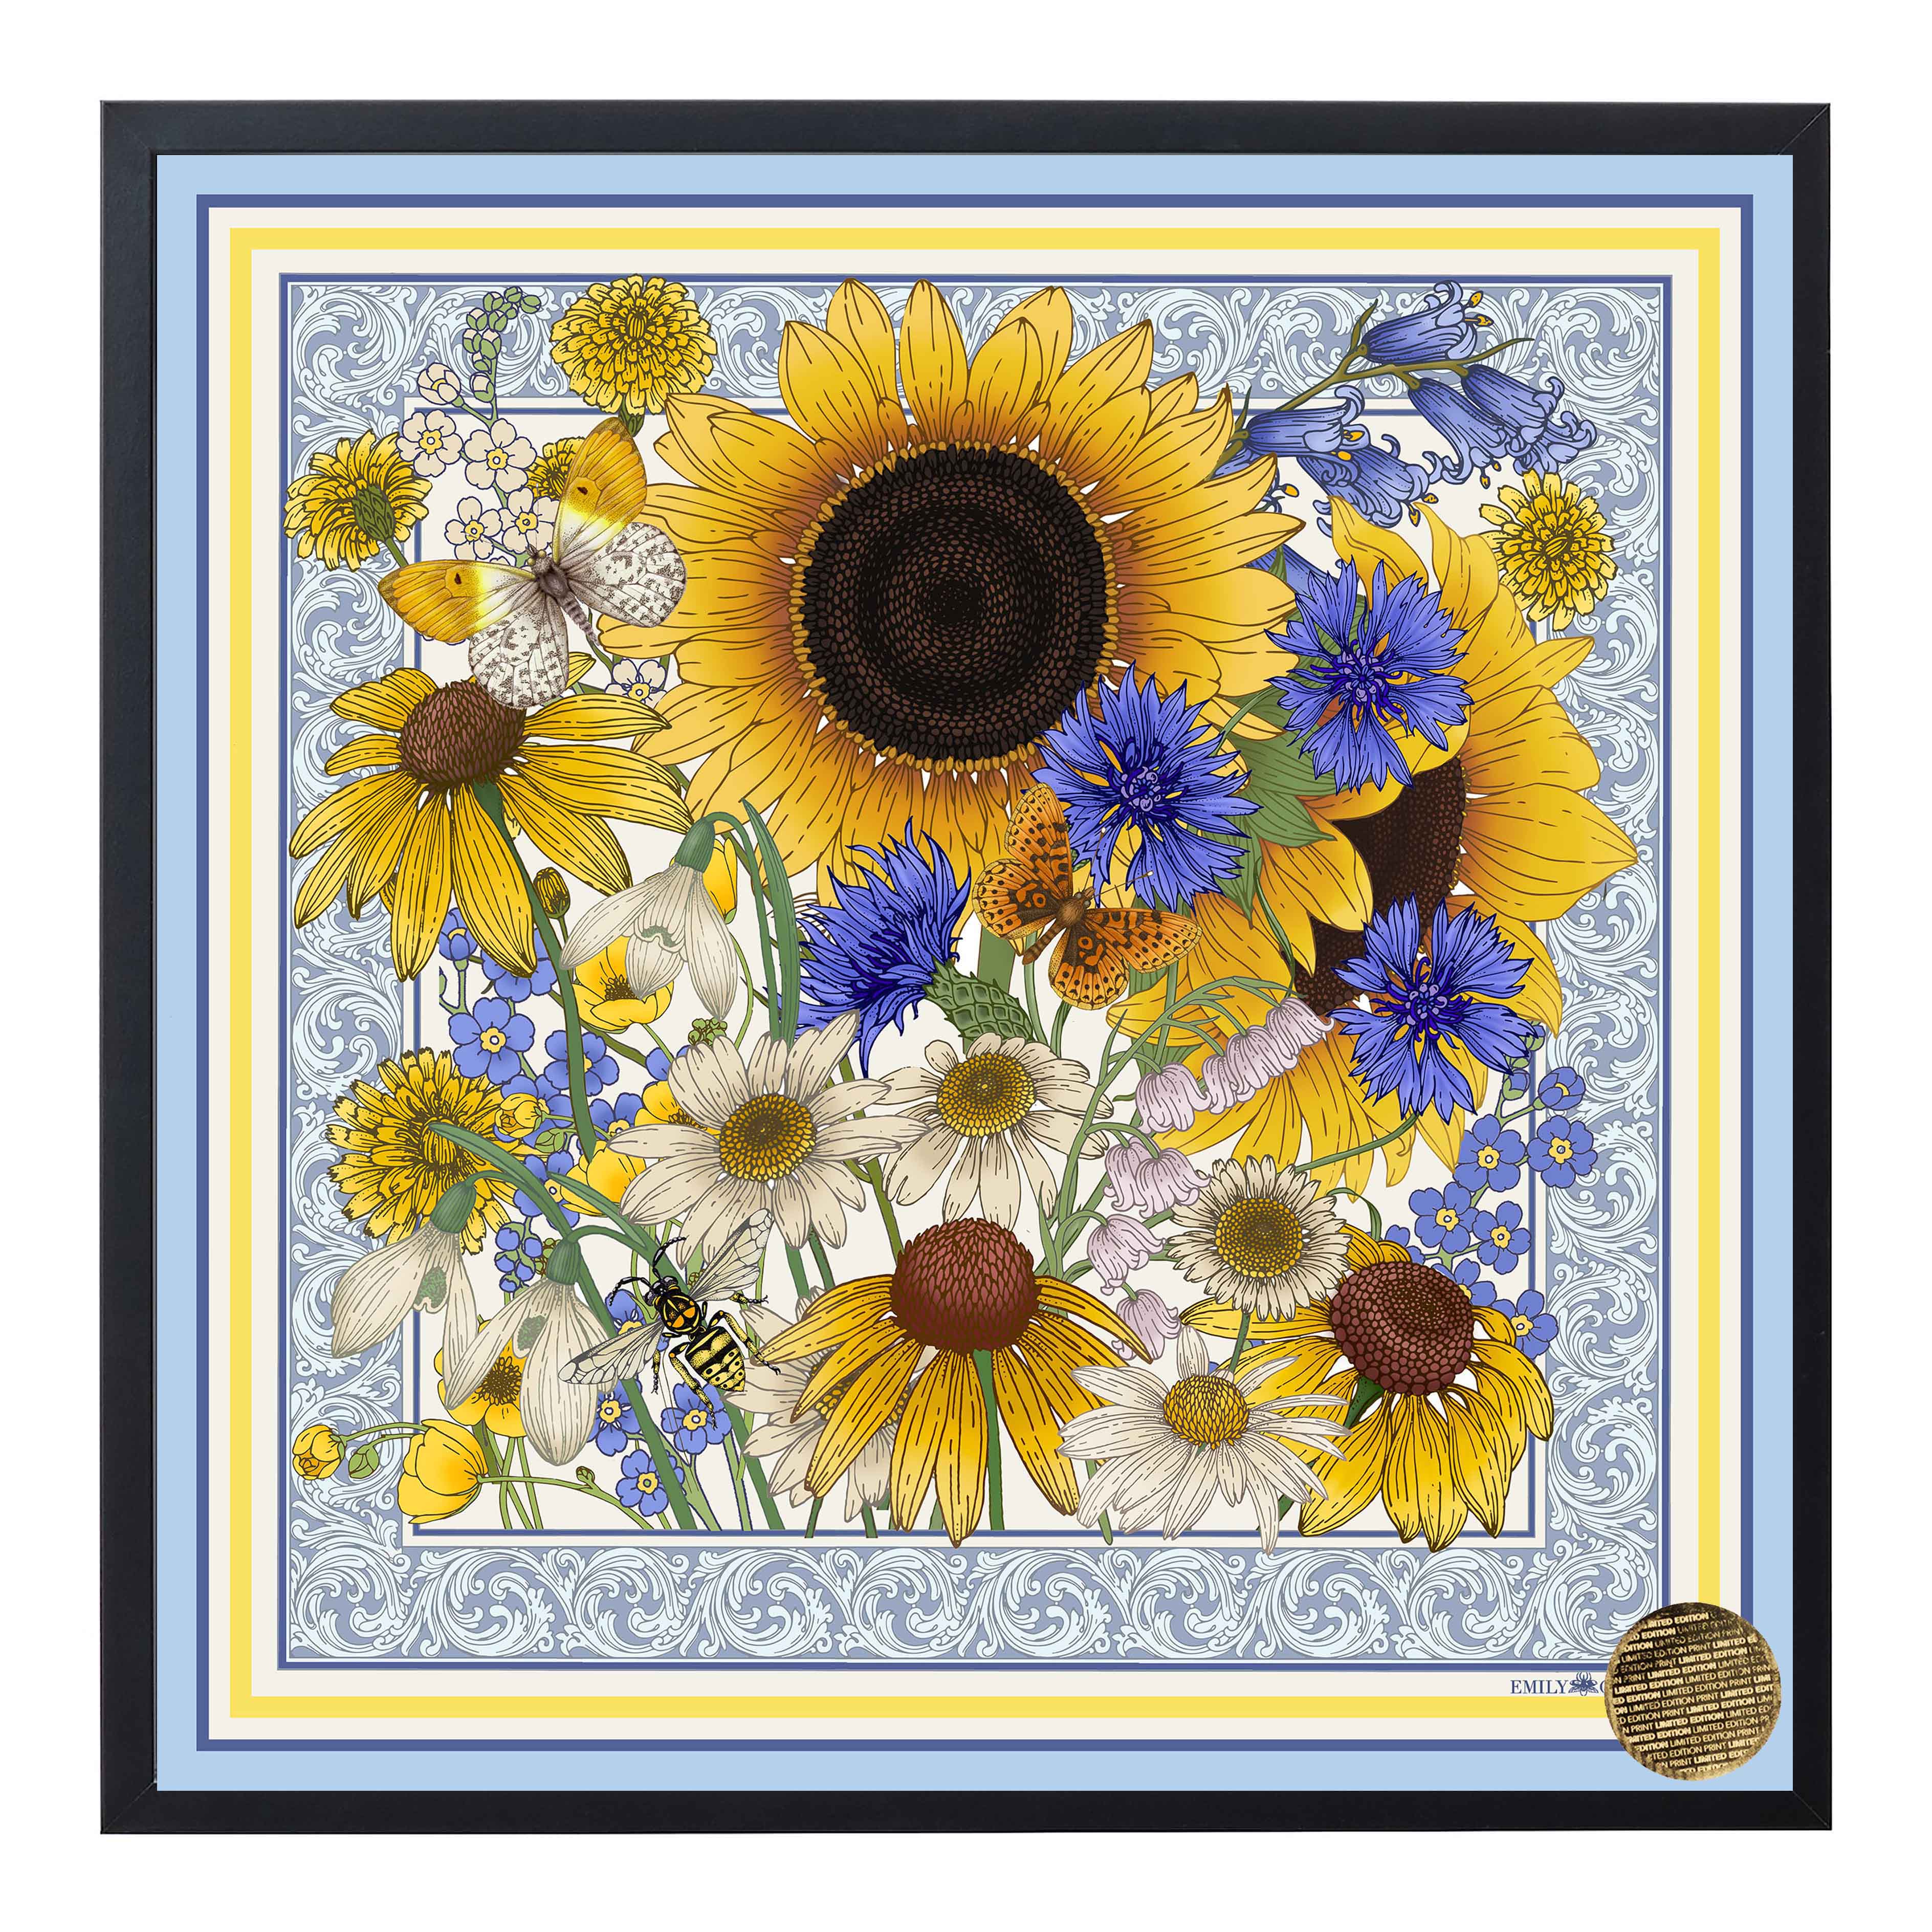 'Sunflower Bouquet' Giclée Print - Limited Edition